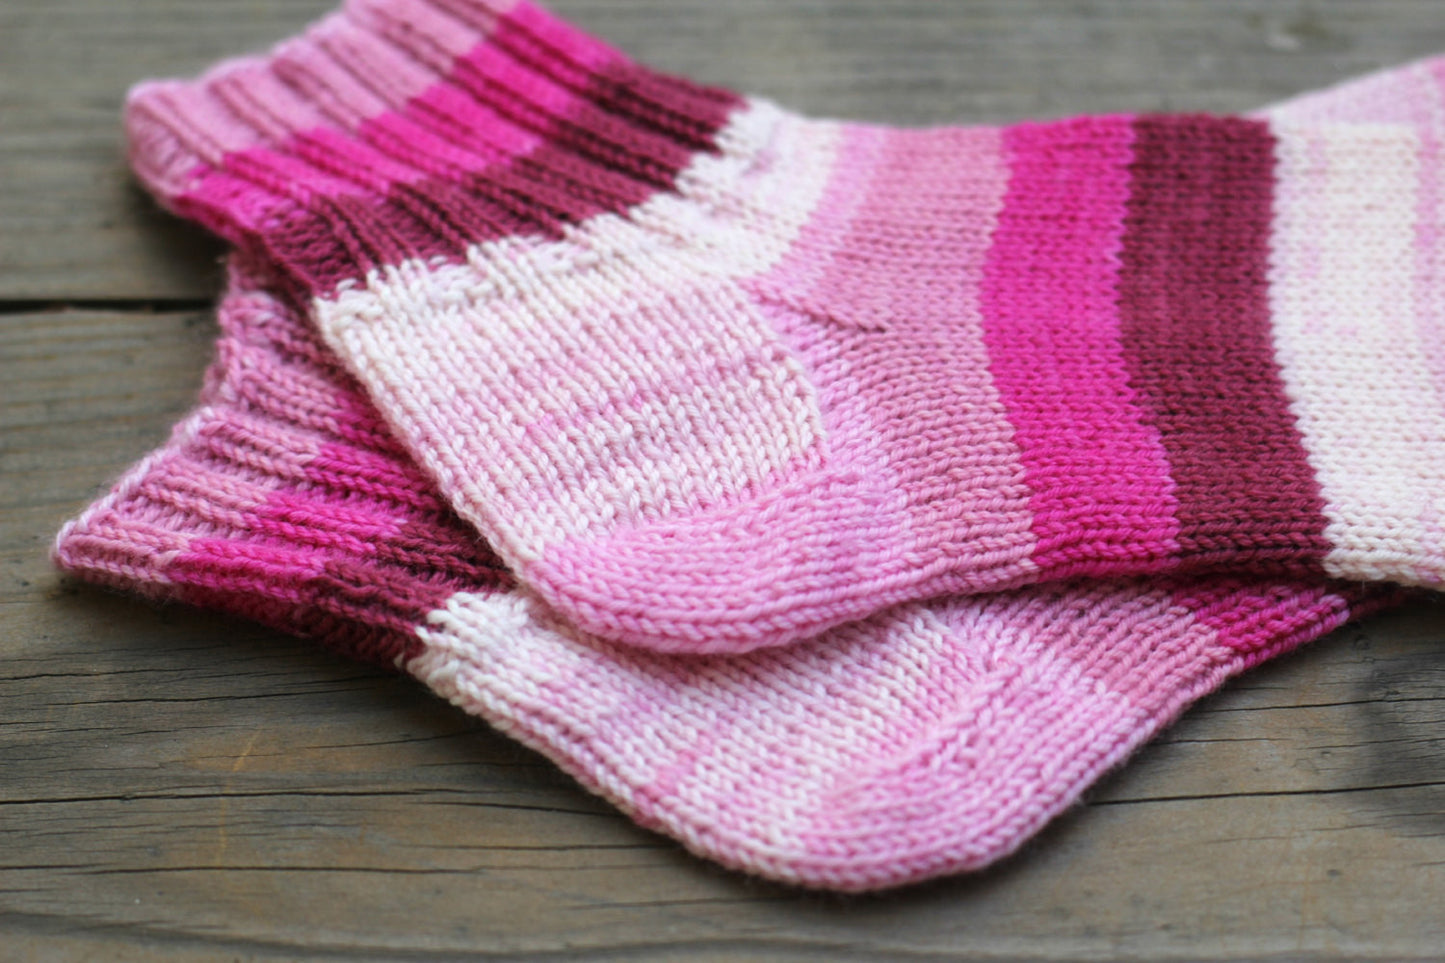 Knit socks with pink stripes